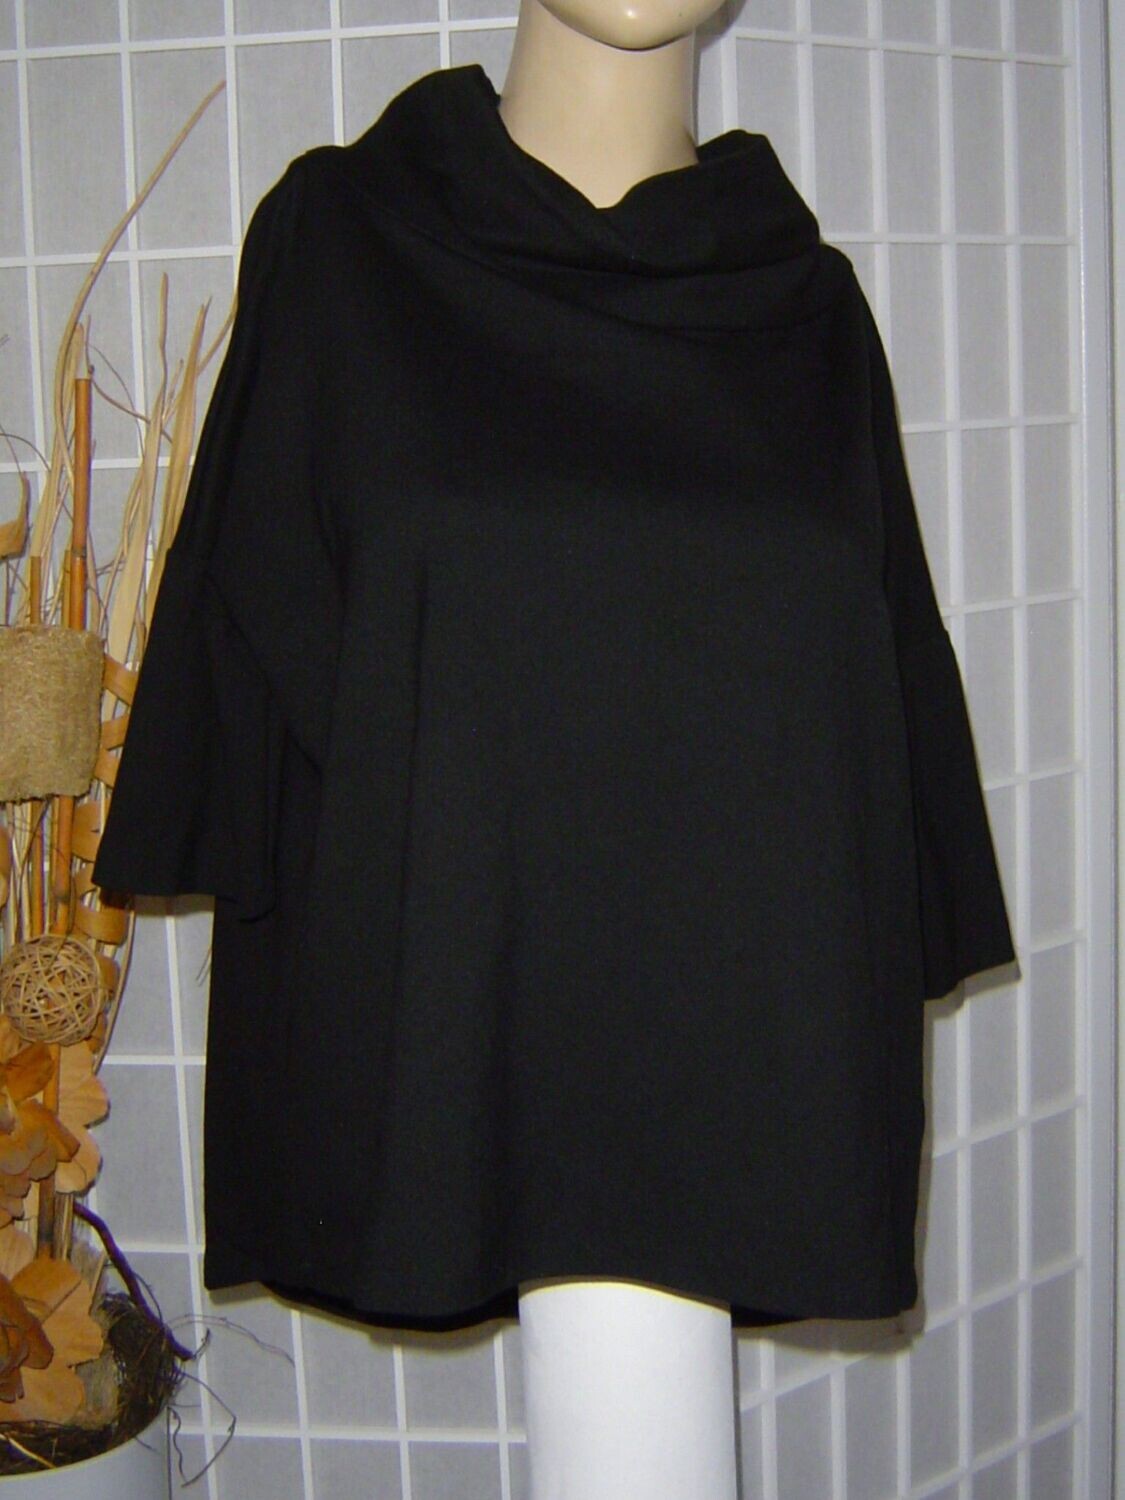 someday. Damen Sweatshirt Gr. 38 schwarz funnel neck Modell UDINE oversize